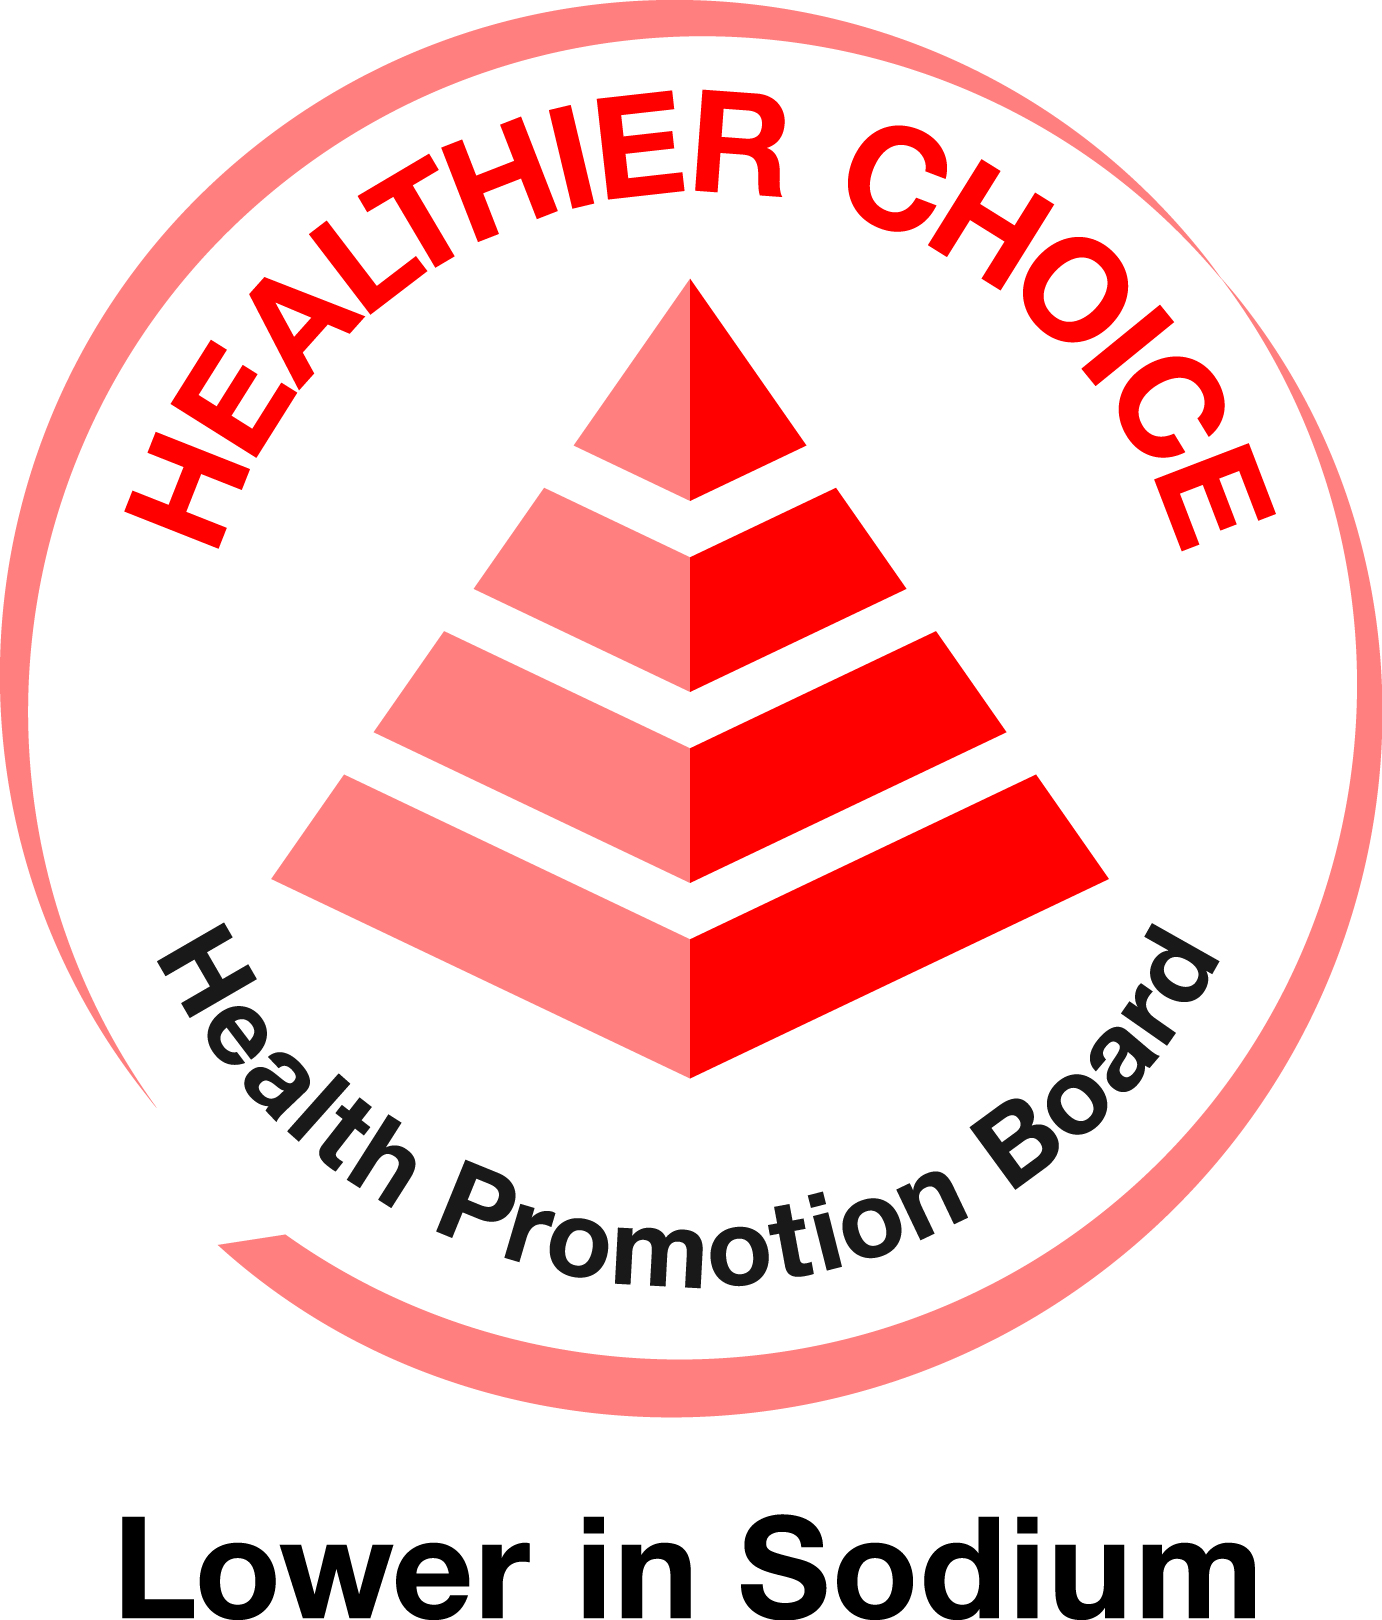 Lower in Sodium Healthier Choice Symbol